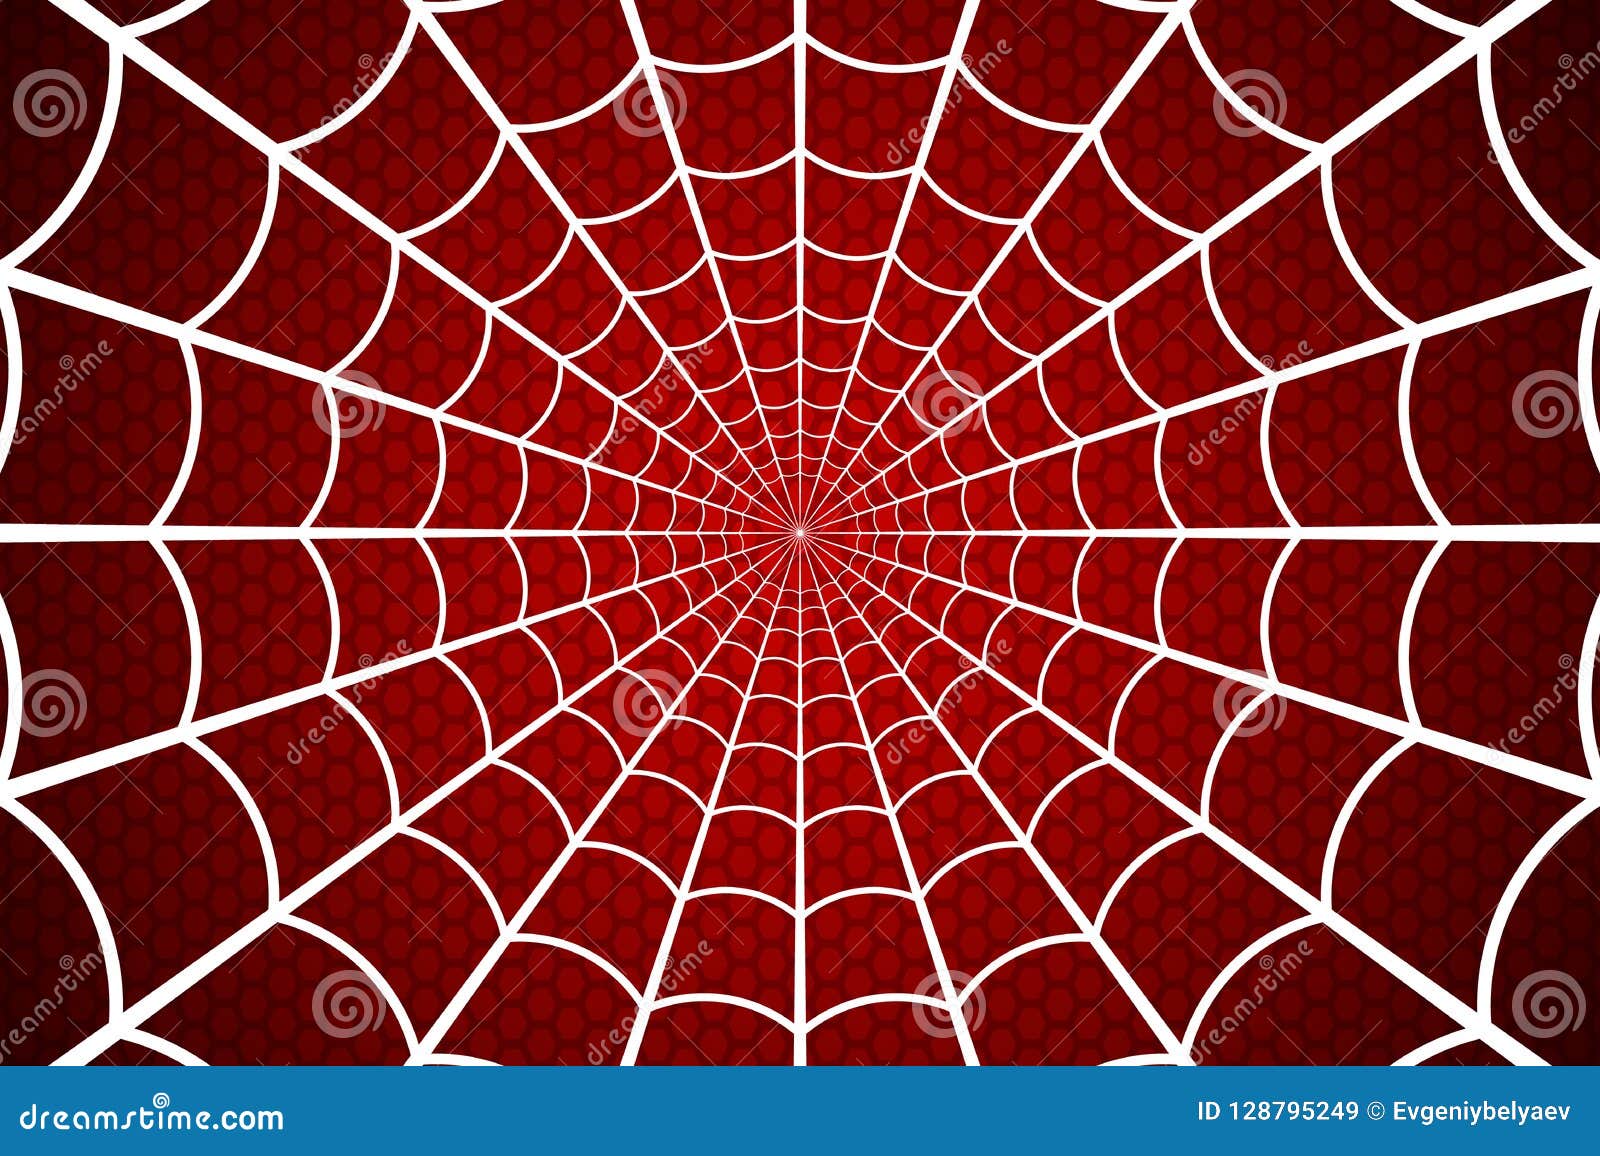 spider web. cobweb on red background.  